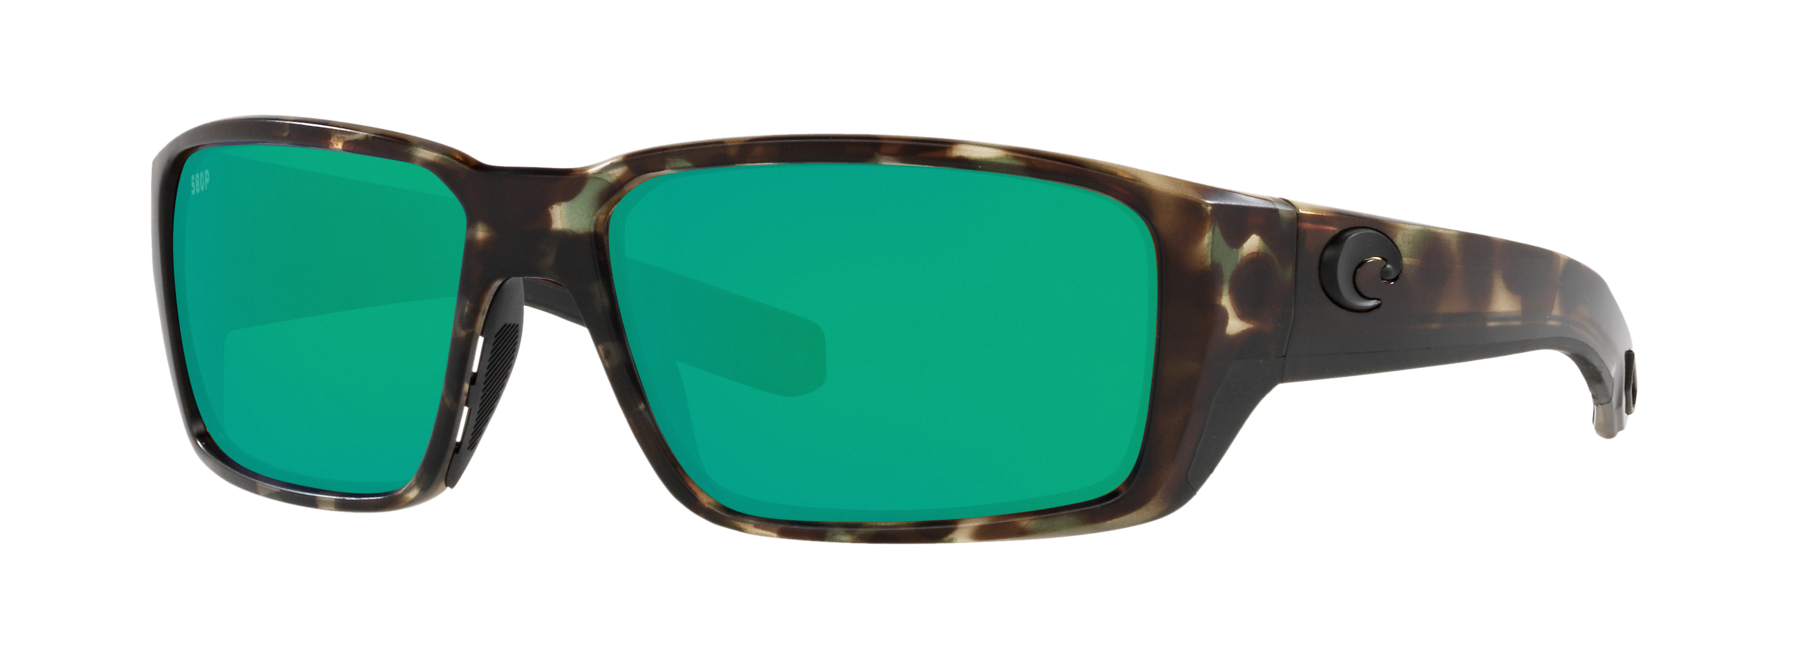 Best Men's Costa Fishing Sunglasses of 2021